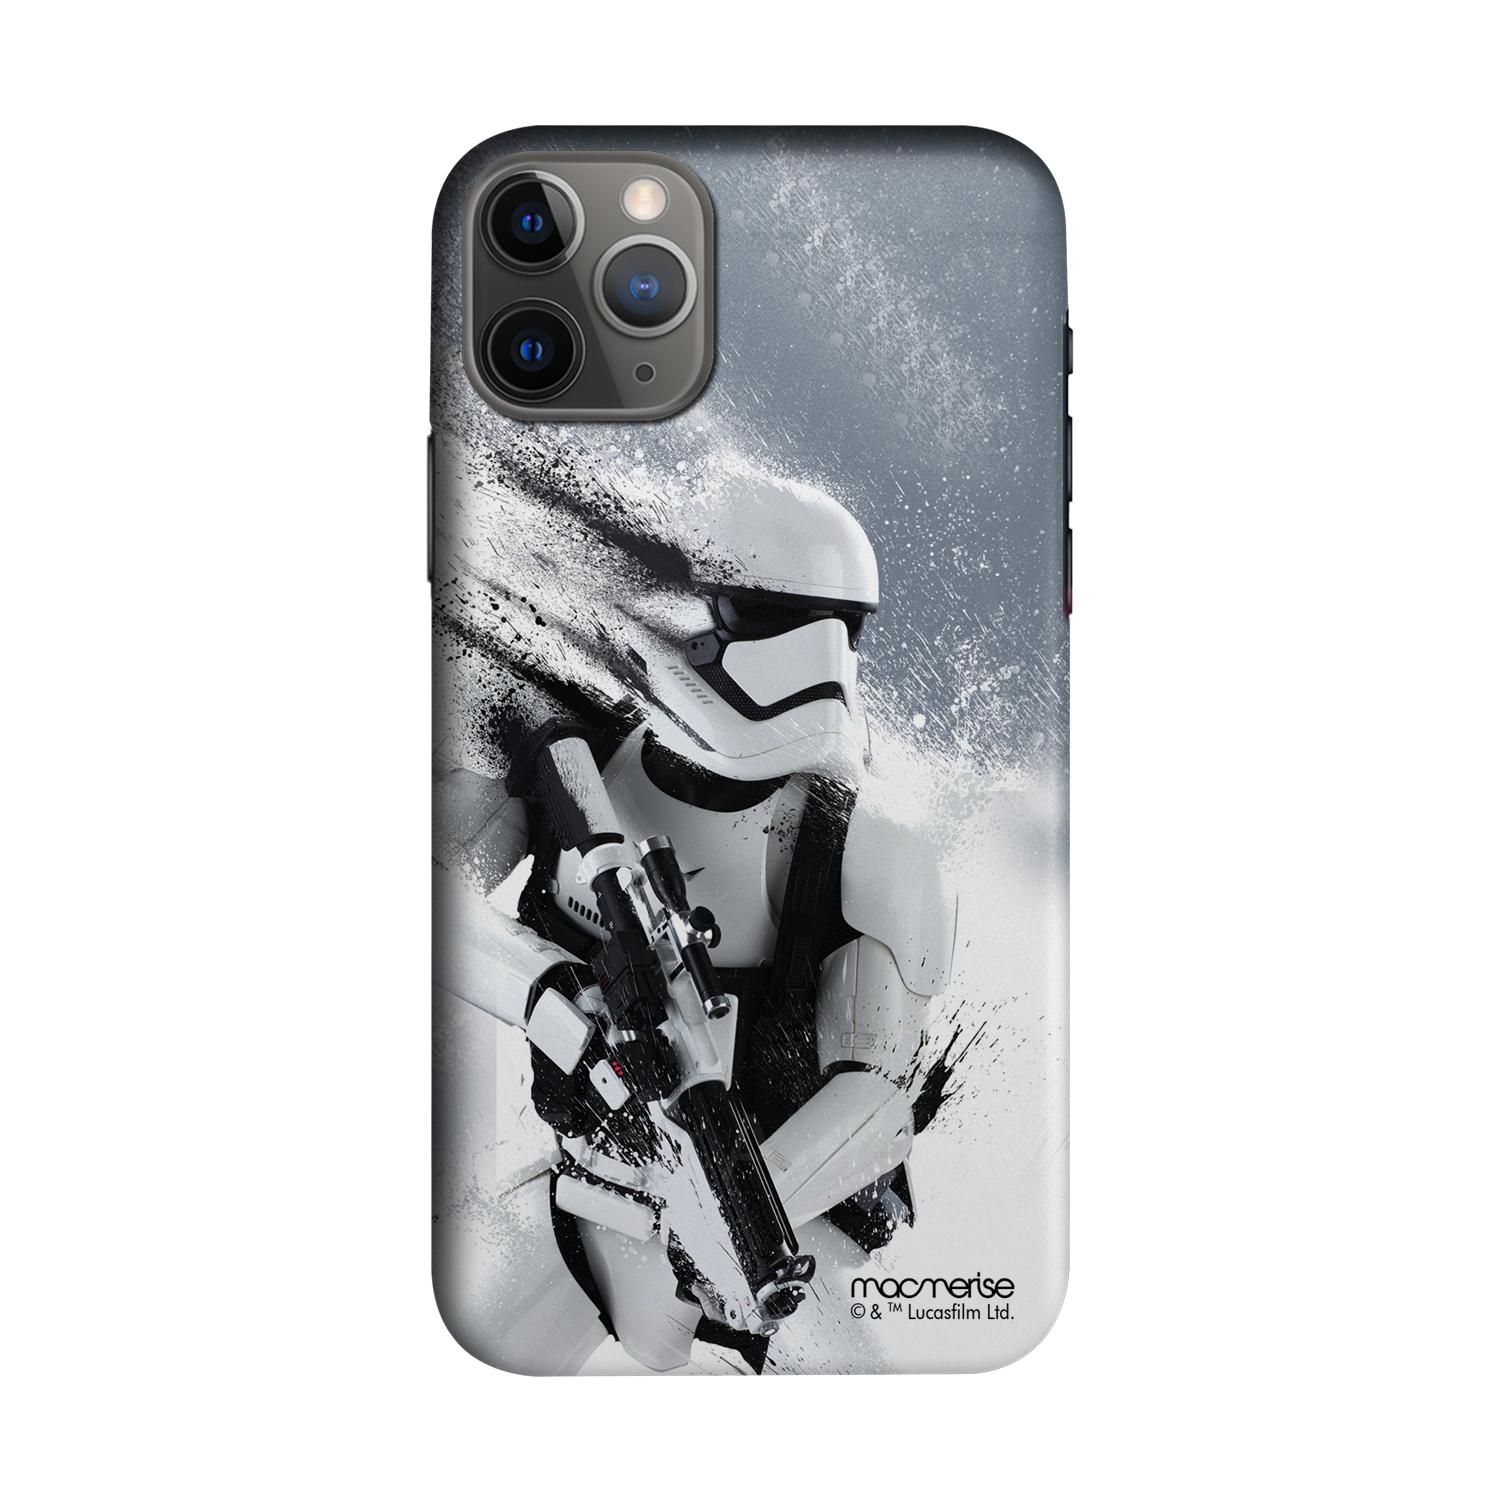 Buy Trooper Storm - Sleek Phone Case for iPhone 11 Pro Max Online